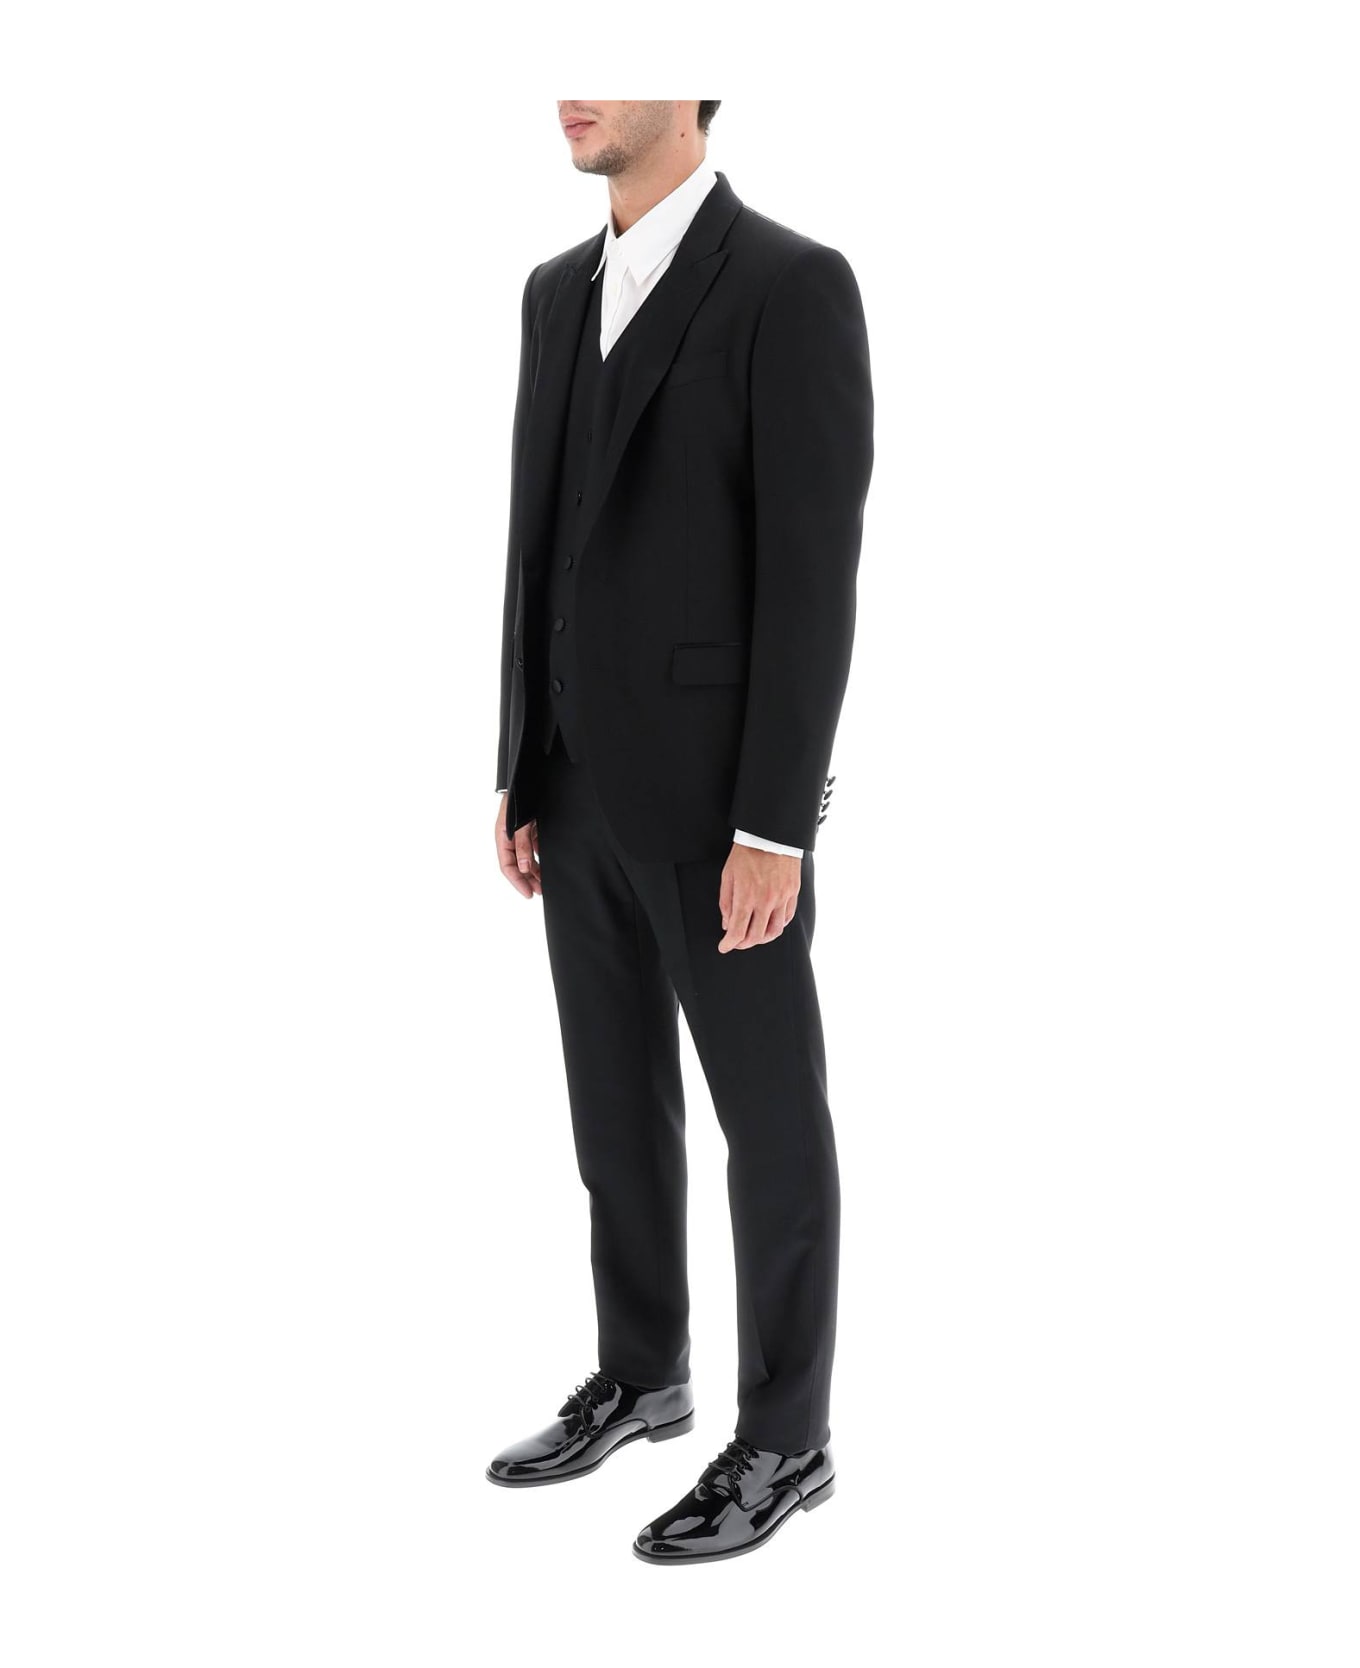 Dolce & Gabbana Martini Fit Tuxedo Suit - Black